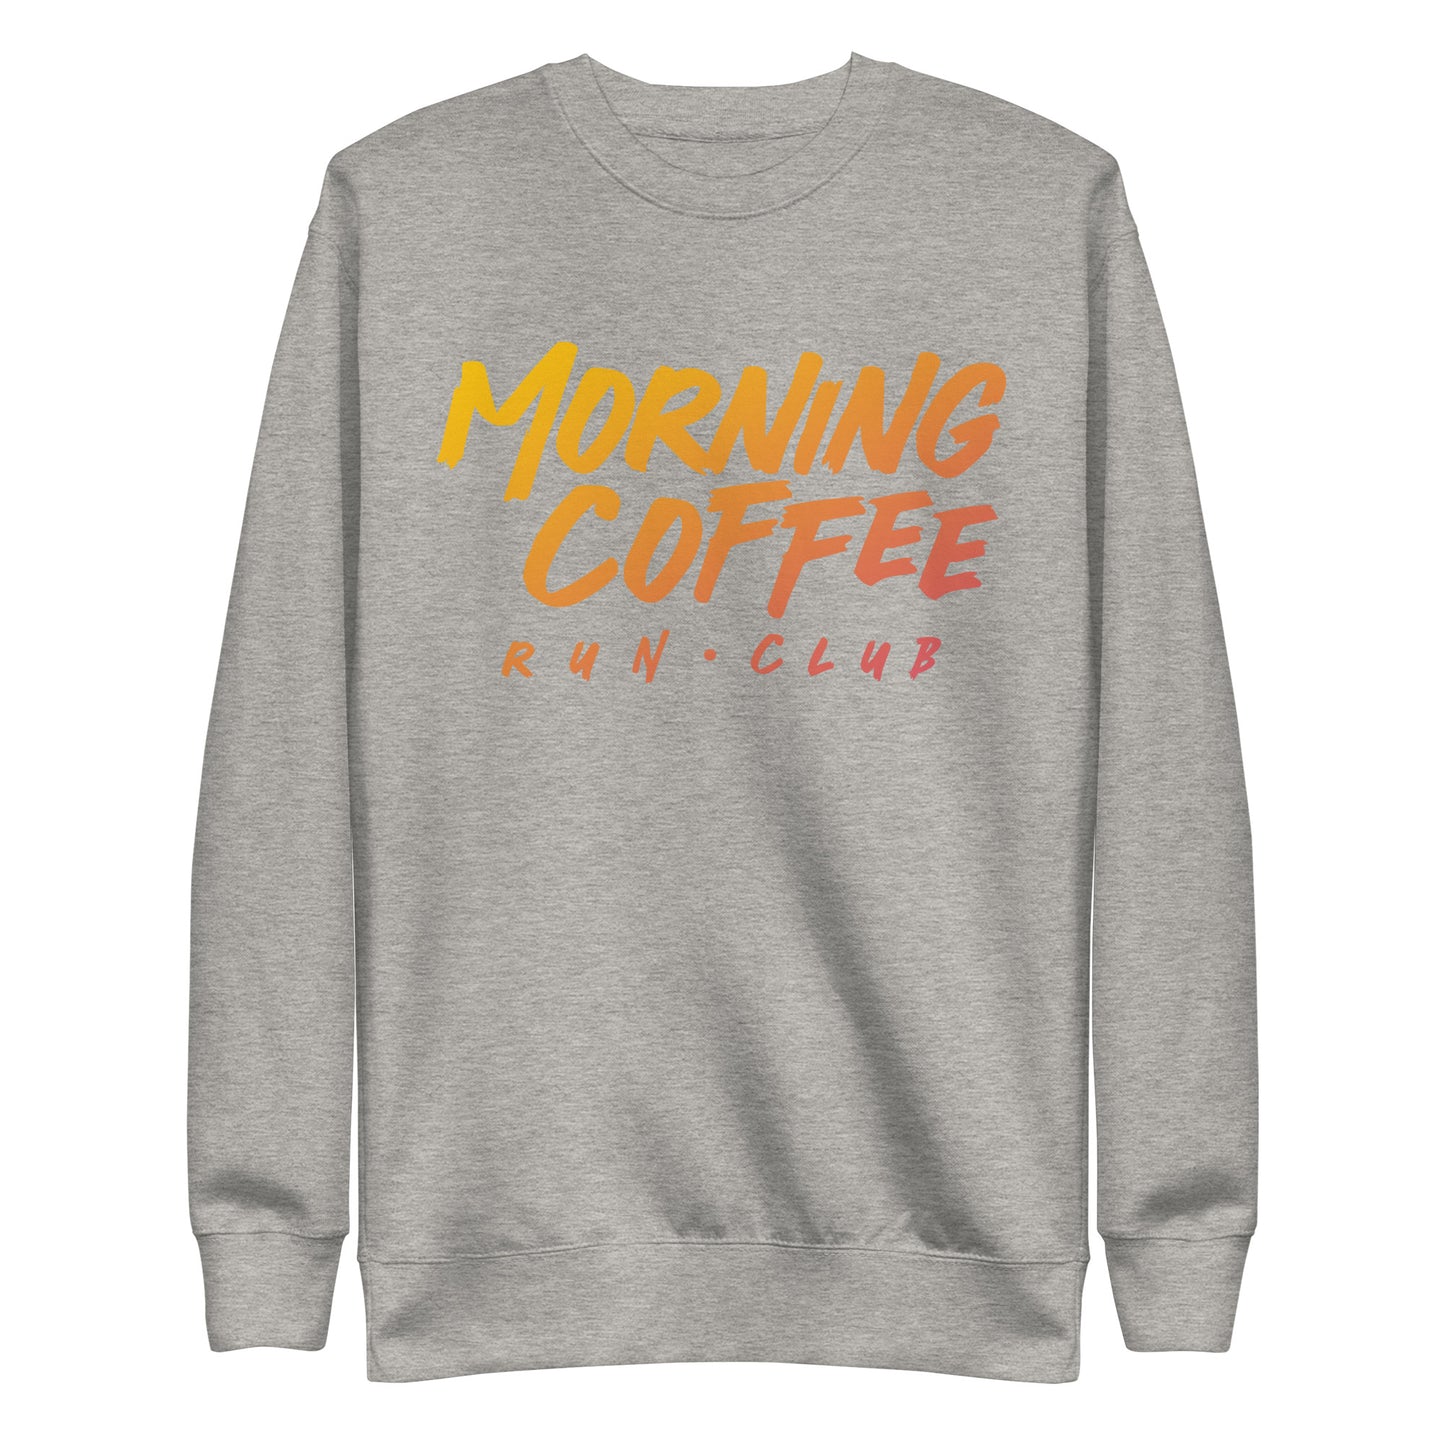 Morning Coffee Run Club Sunrise Wordmark Unisex Crewneck Sweatshirt